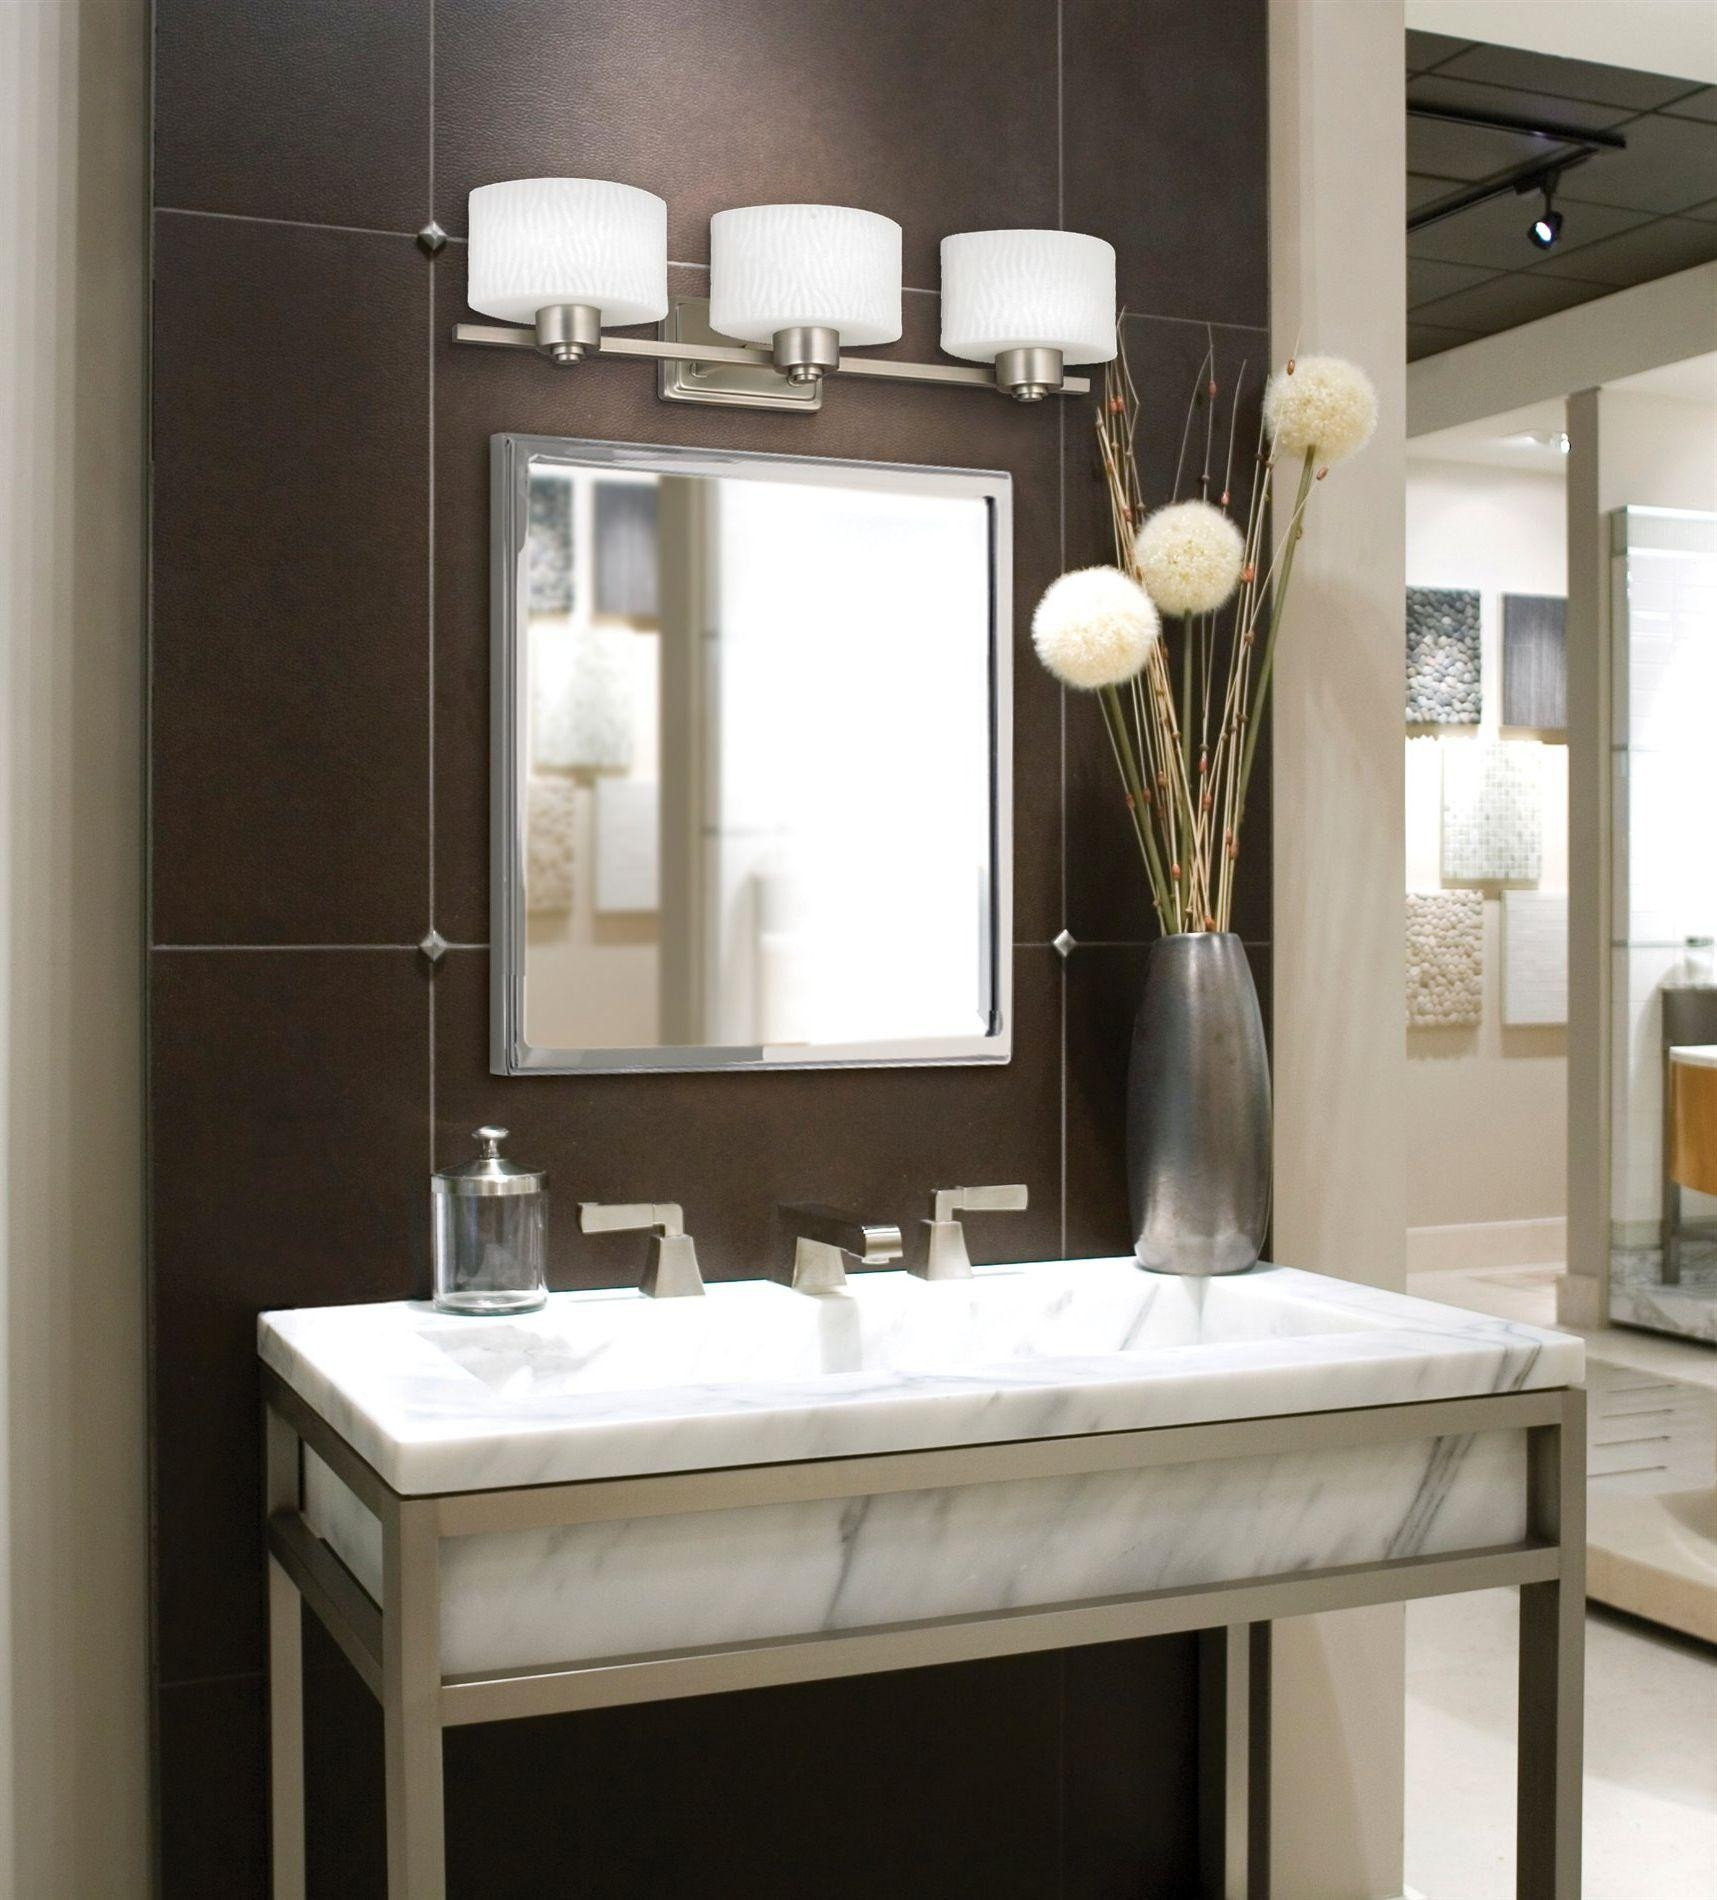 Bathroom Mirrors Over Vanity
 20 Bathroom Mirrors Ideas With Vanity